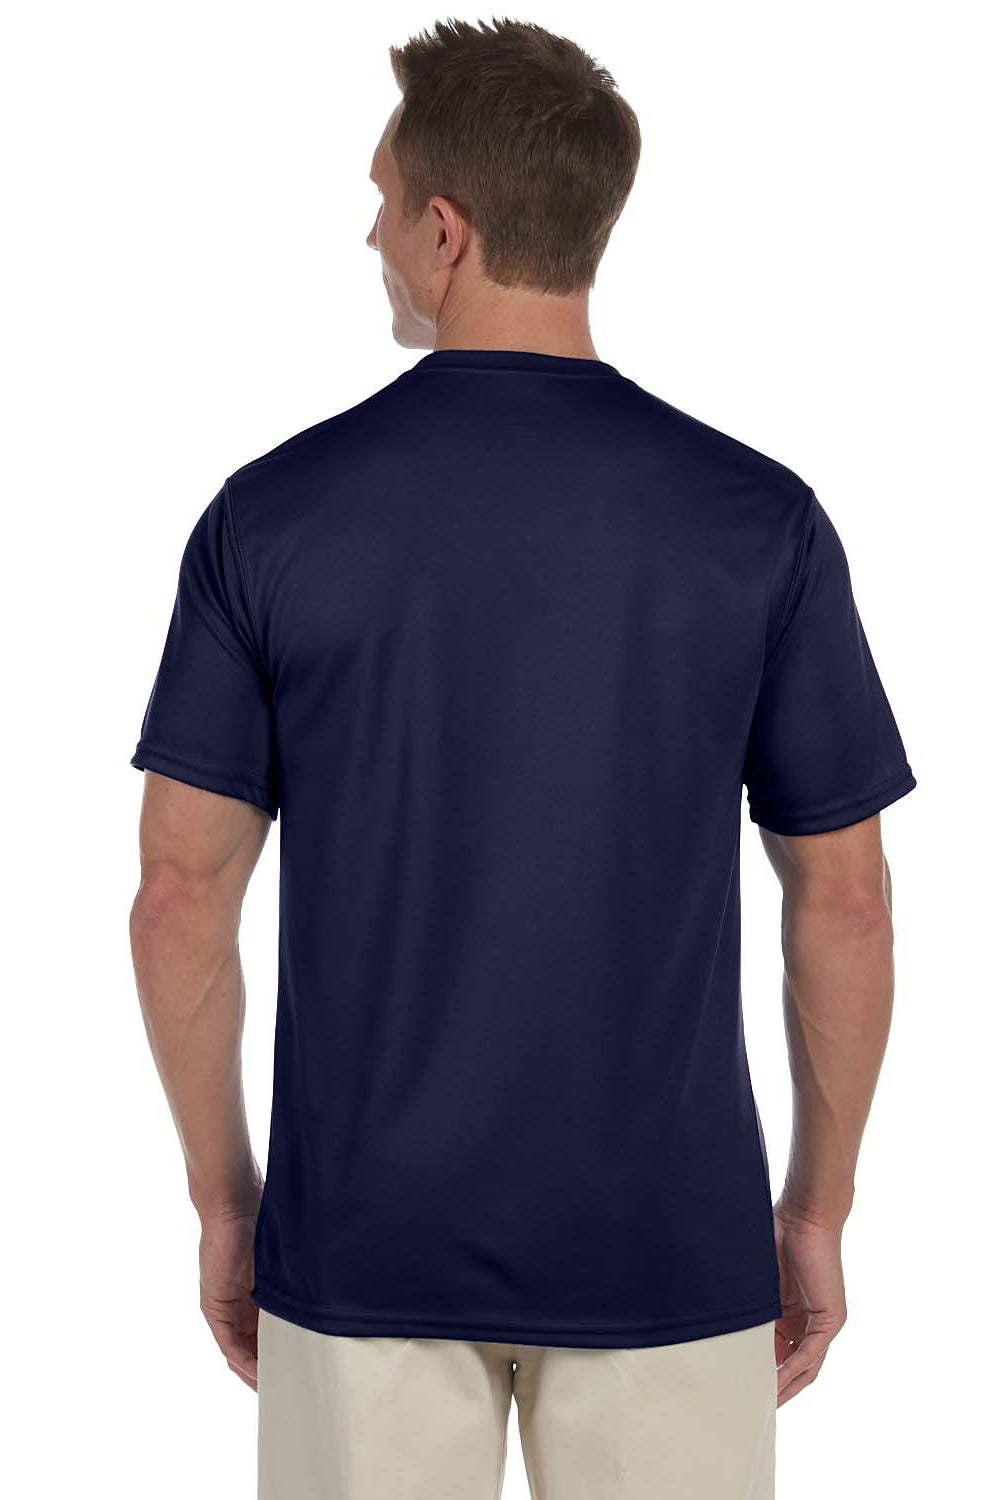 Augusta Sportswear 790 Mens Moisture Wicking Short Sleeve Crewneck T-Shirt Navy Blue Model Back